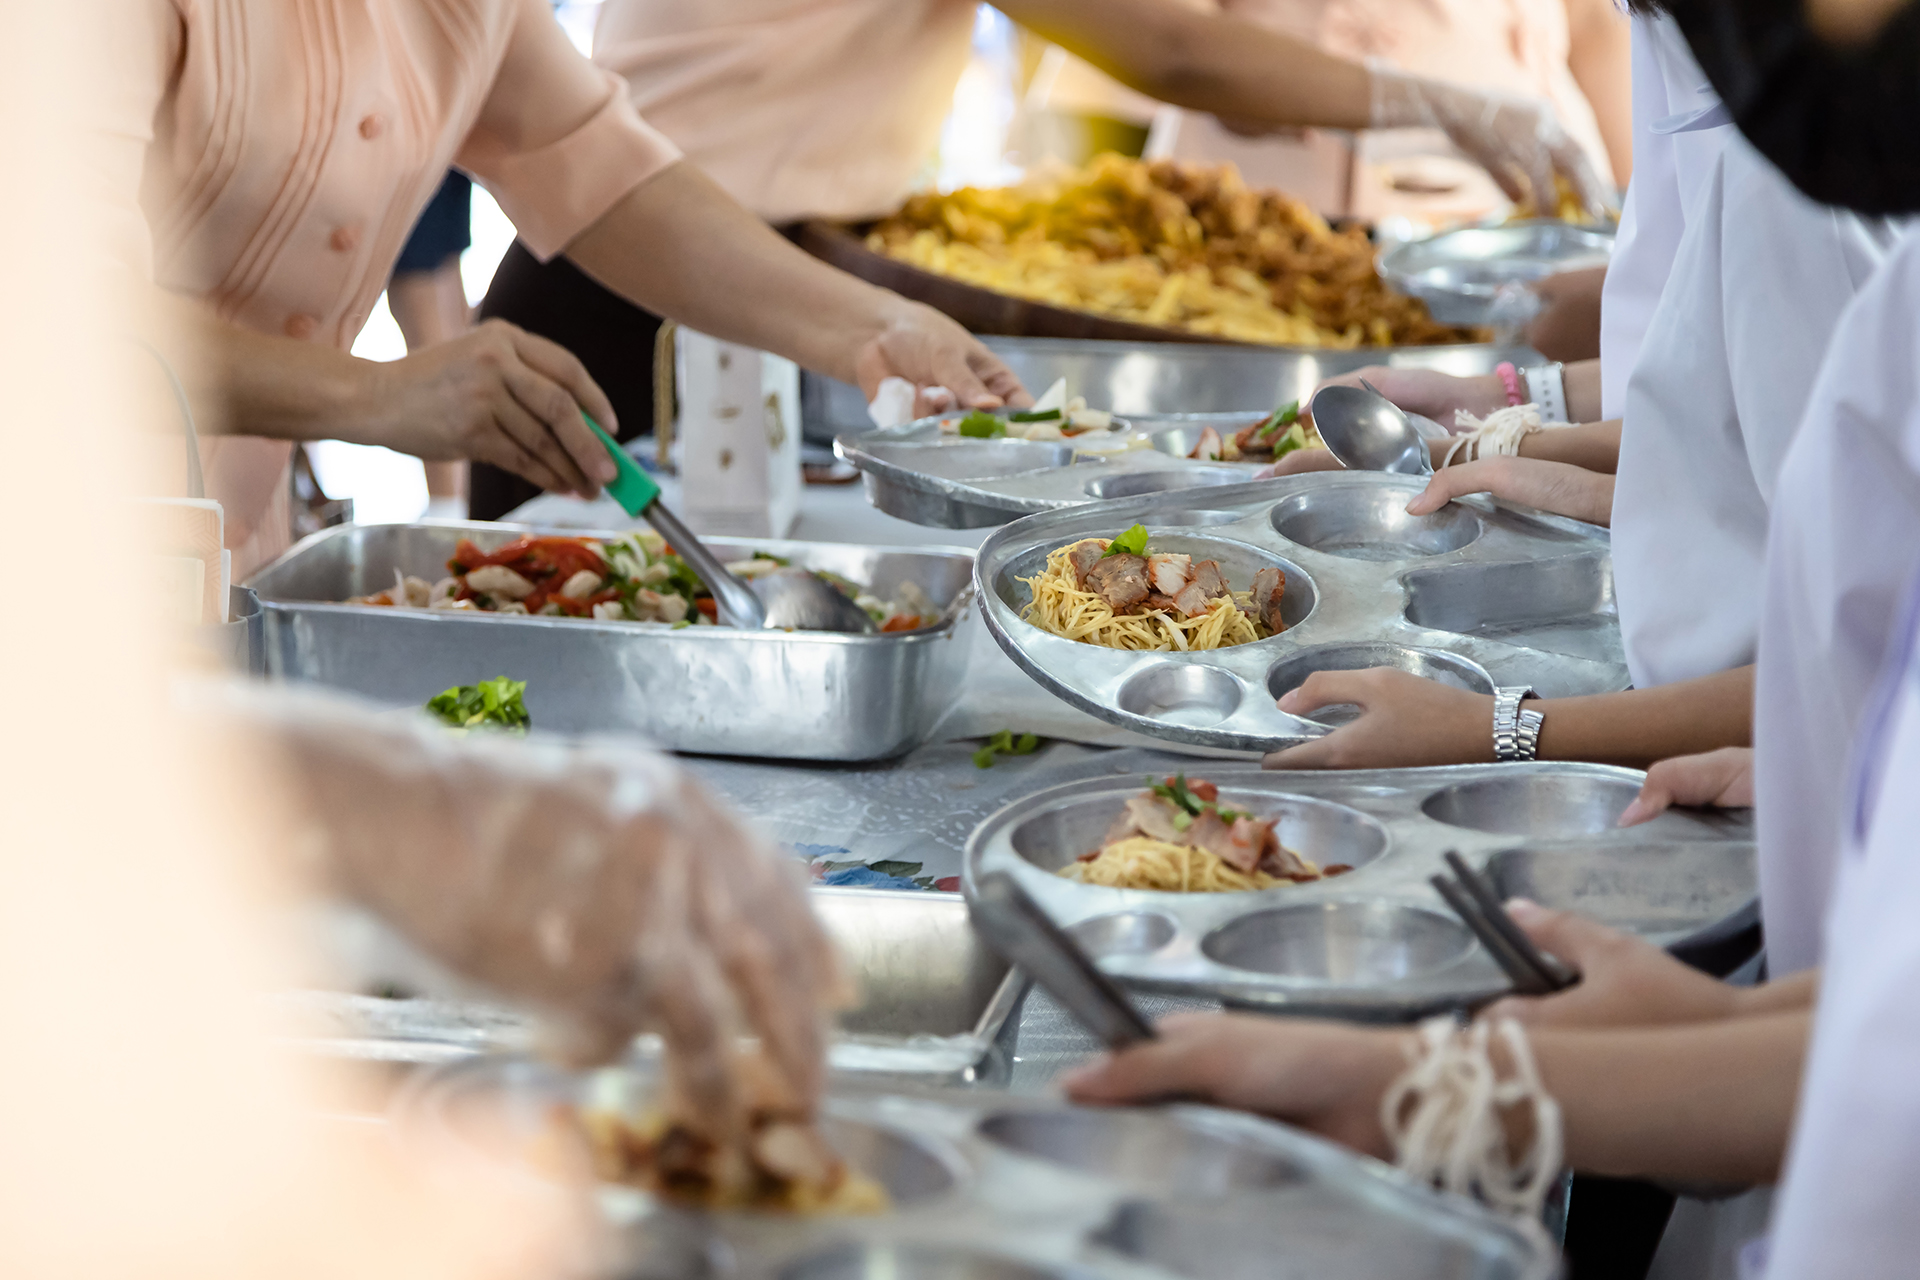 ‘Thai School Lunch’ แพลตฟอร์มจัดสำรับอาหารกลางวันให้นักเรียนไทย ถูกหลักโภชนาการ รายงานโปร่งใส ตรวจสอบได้แบบเรียลไทม์